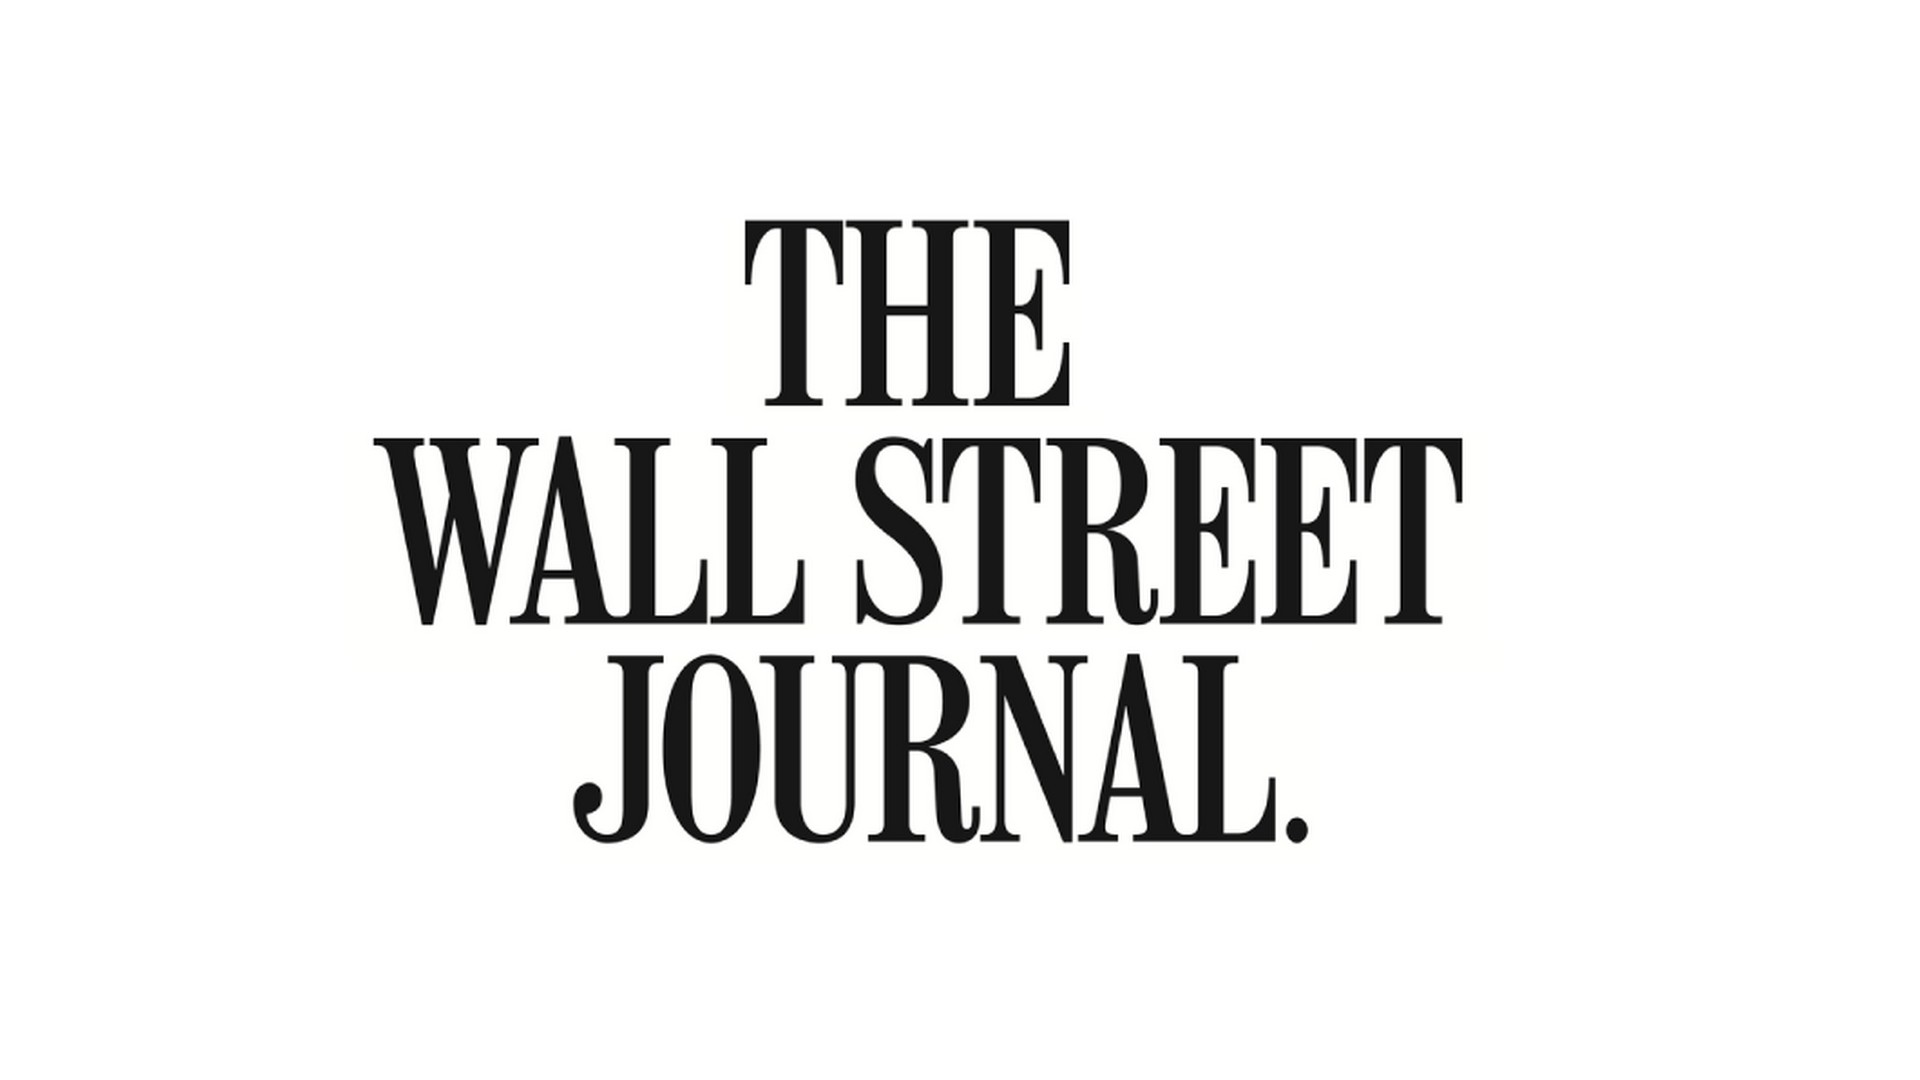 Wall Street Journal article